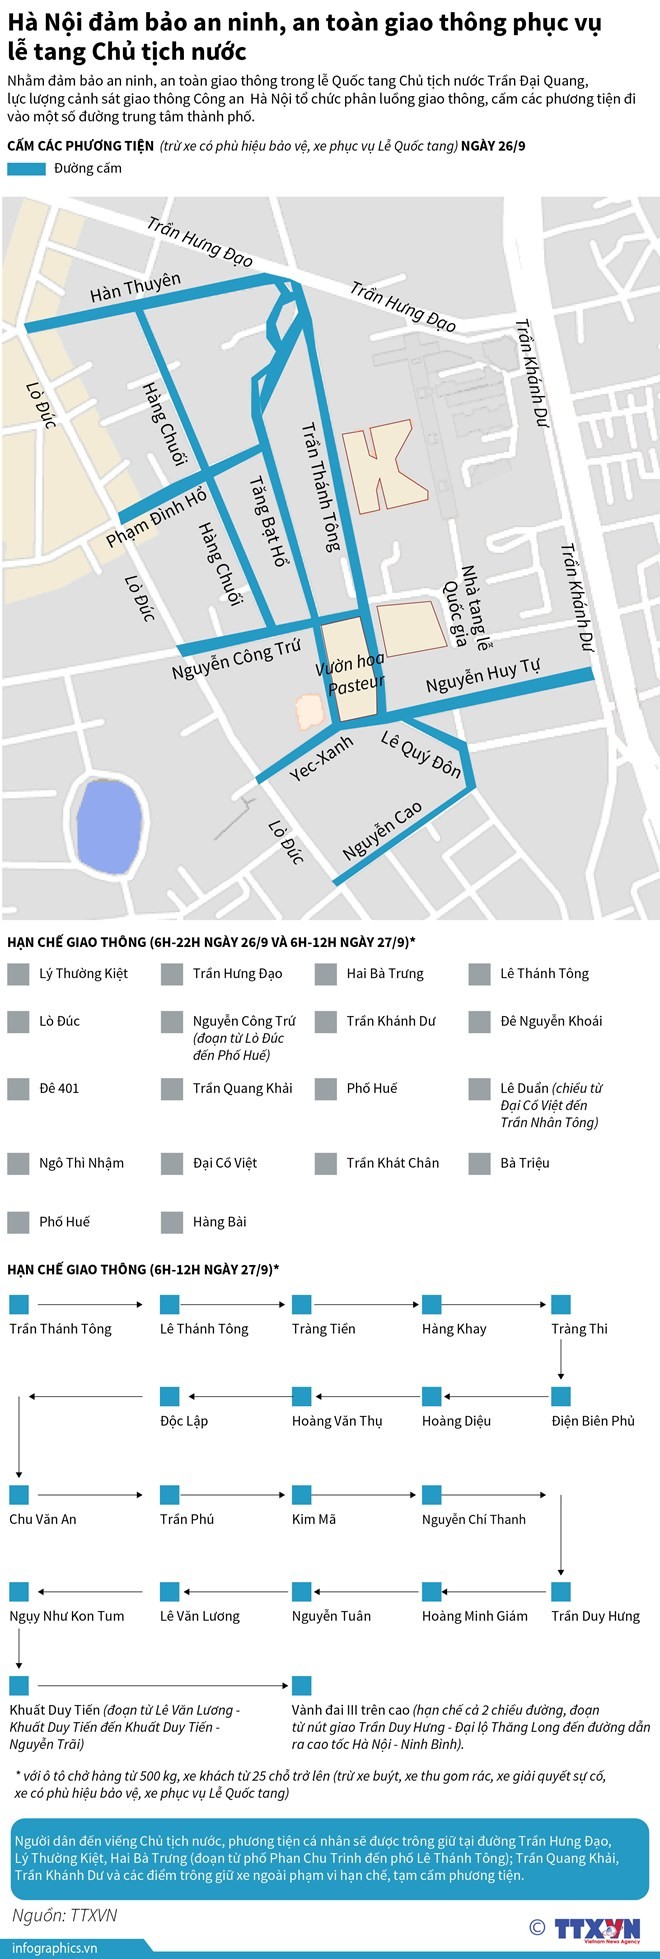 [Infographics] Ha Noi phan luong giao thong phuc vu le Quoc tang